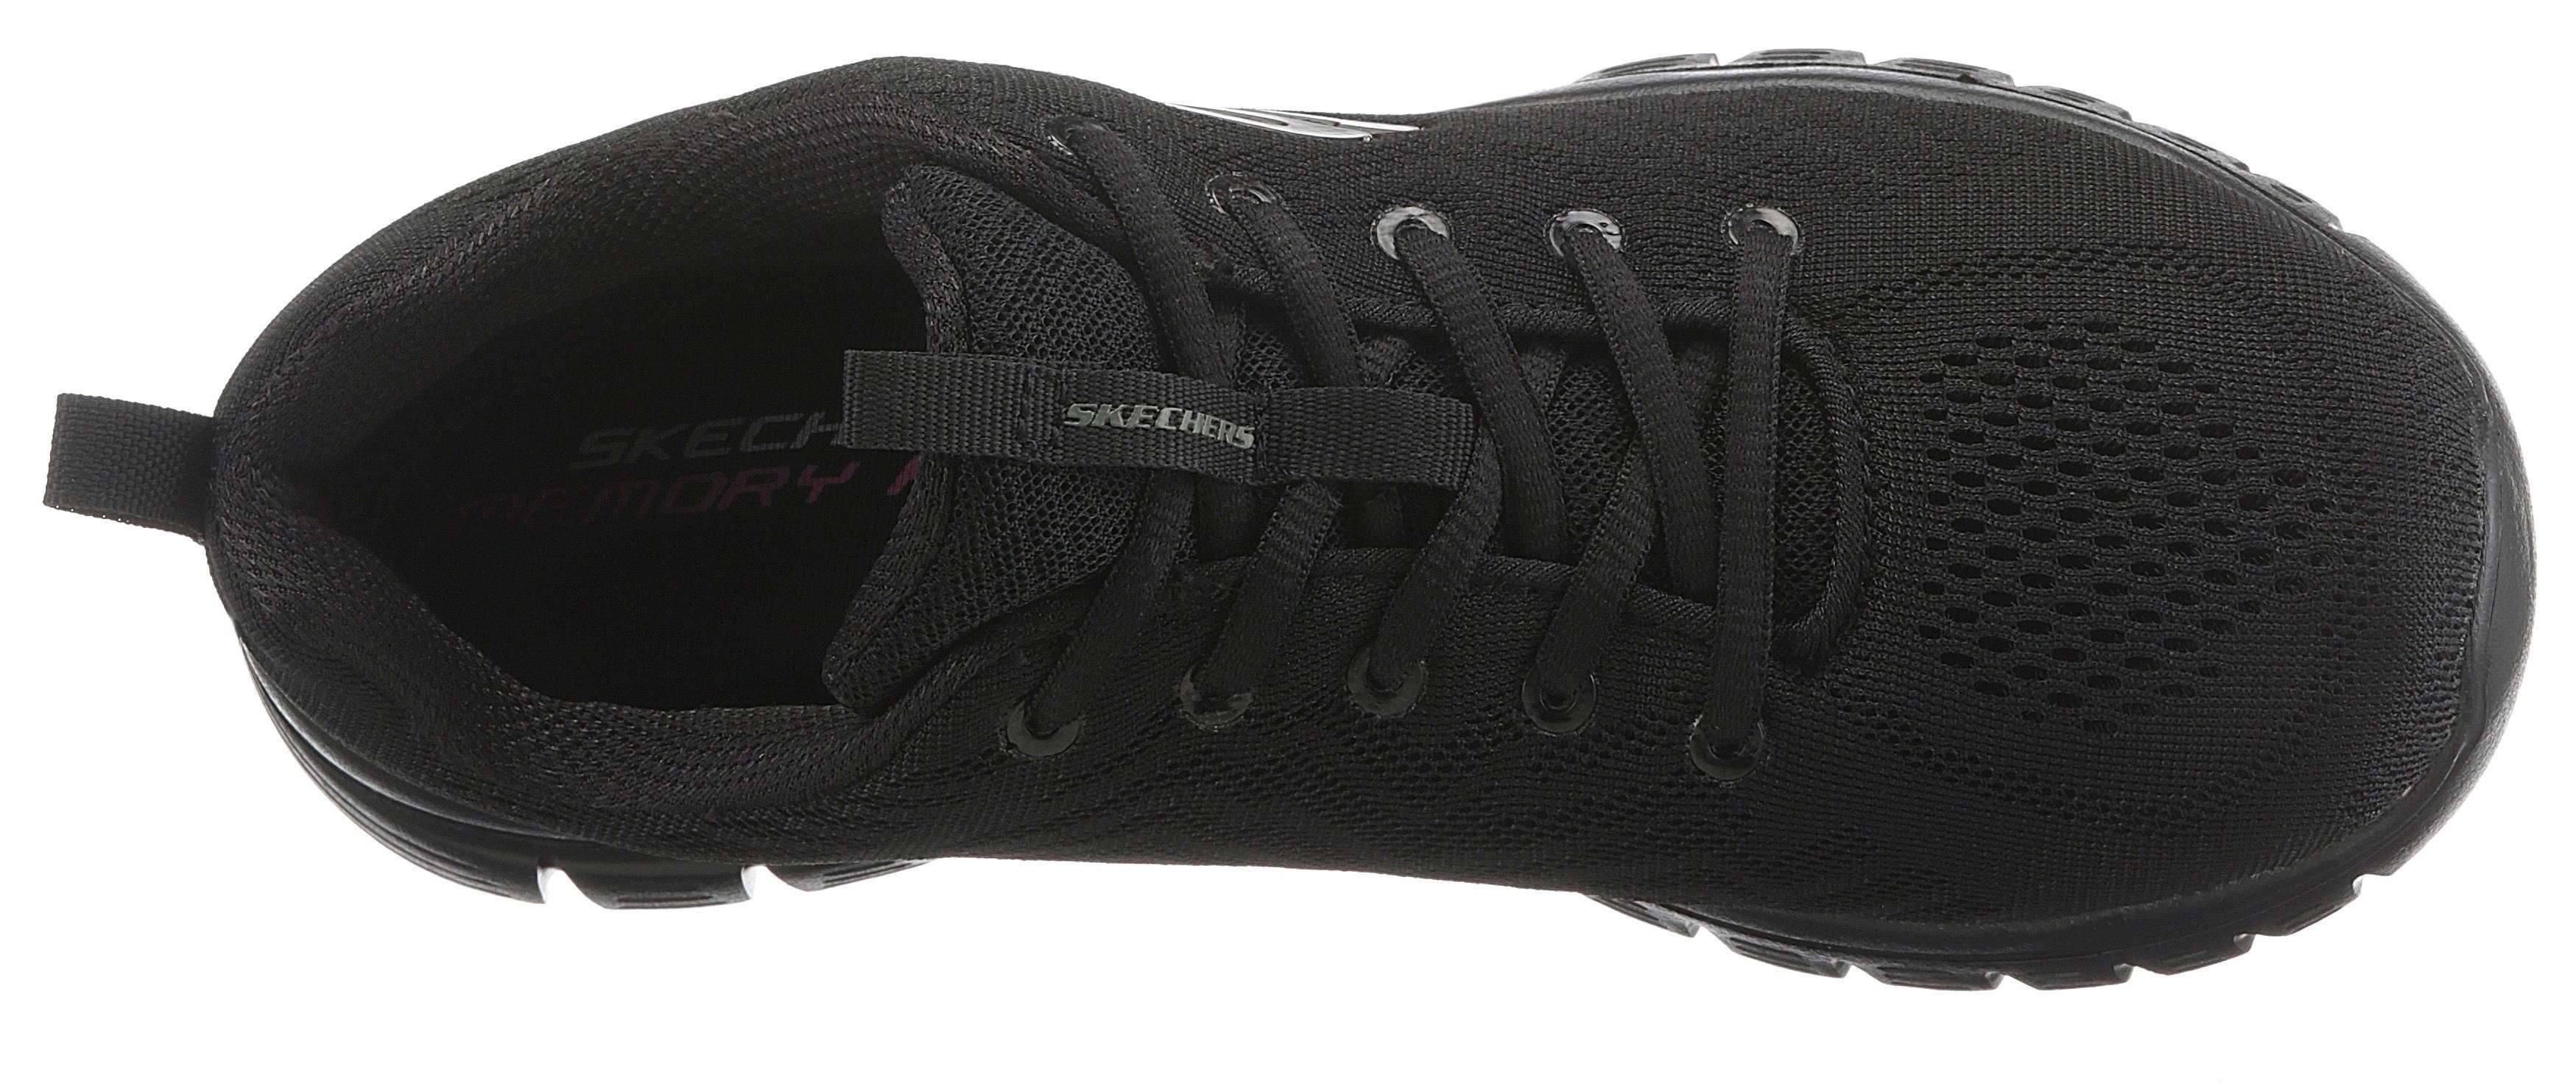 Connected Sneaker - schwarz Skechers Get Foam durch Graceful Dämpfung mit Memory